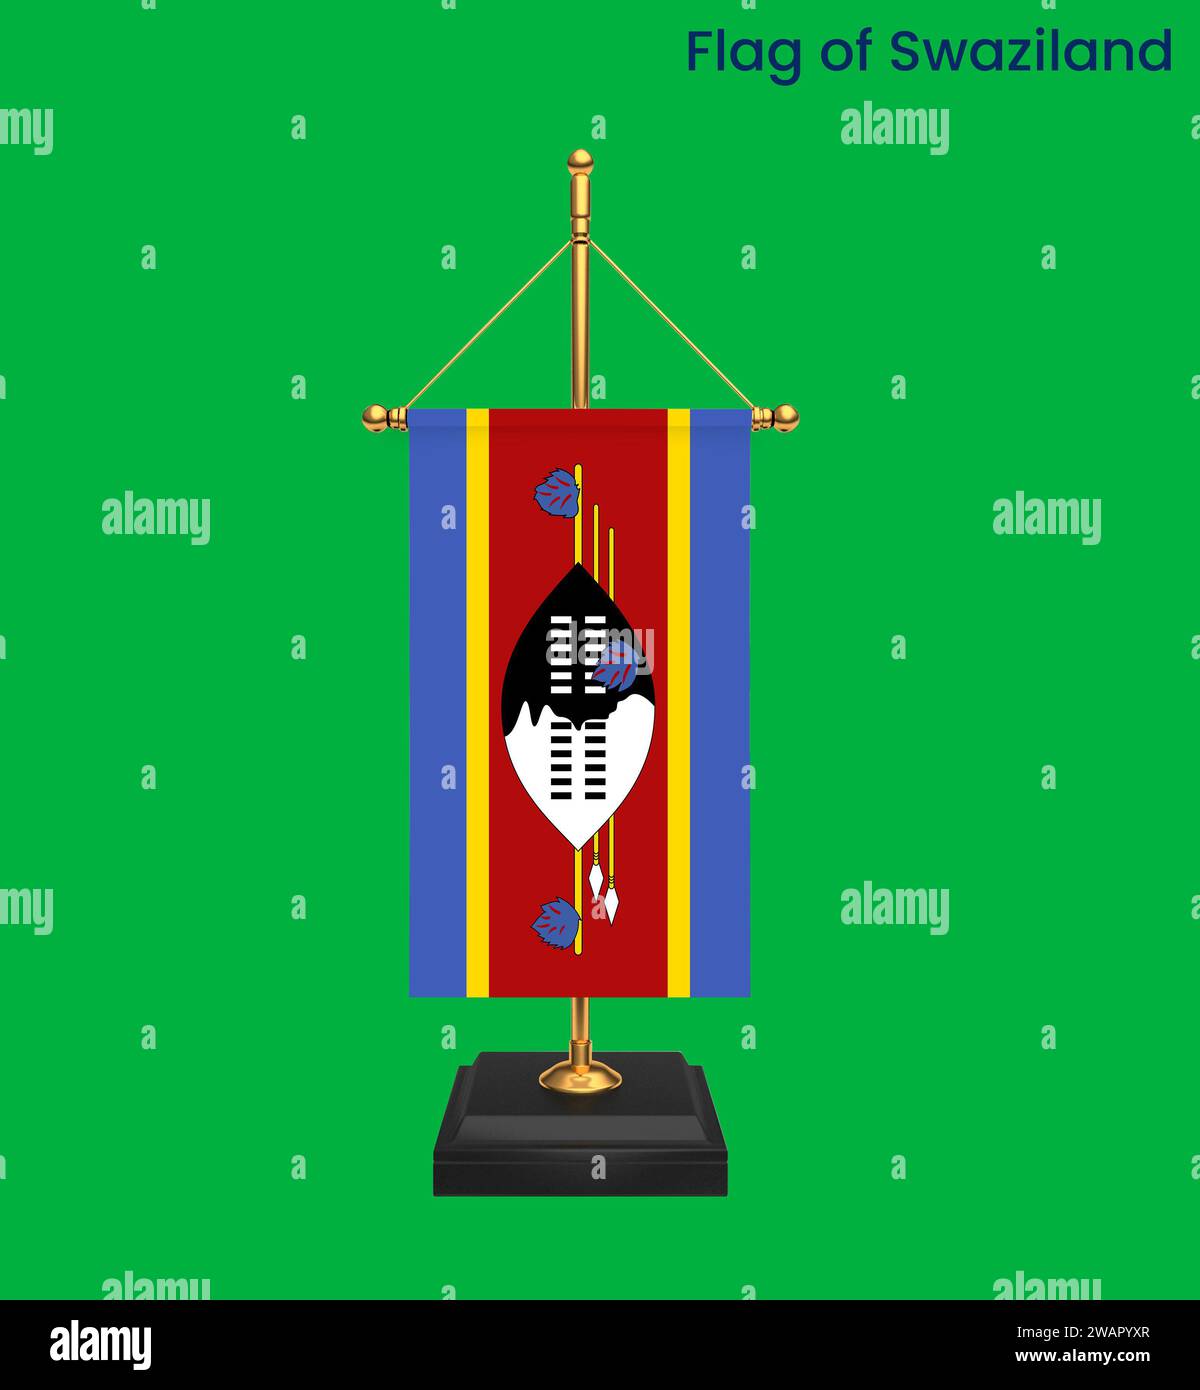 Hohe detaillierte Flagge von Swasiland. Nationale Flagge Swasilands. Afrika. 3D-Abbildung. Stockfoto